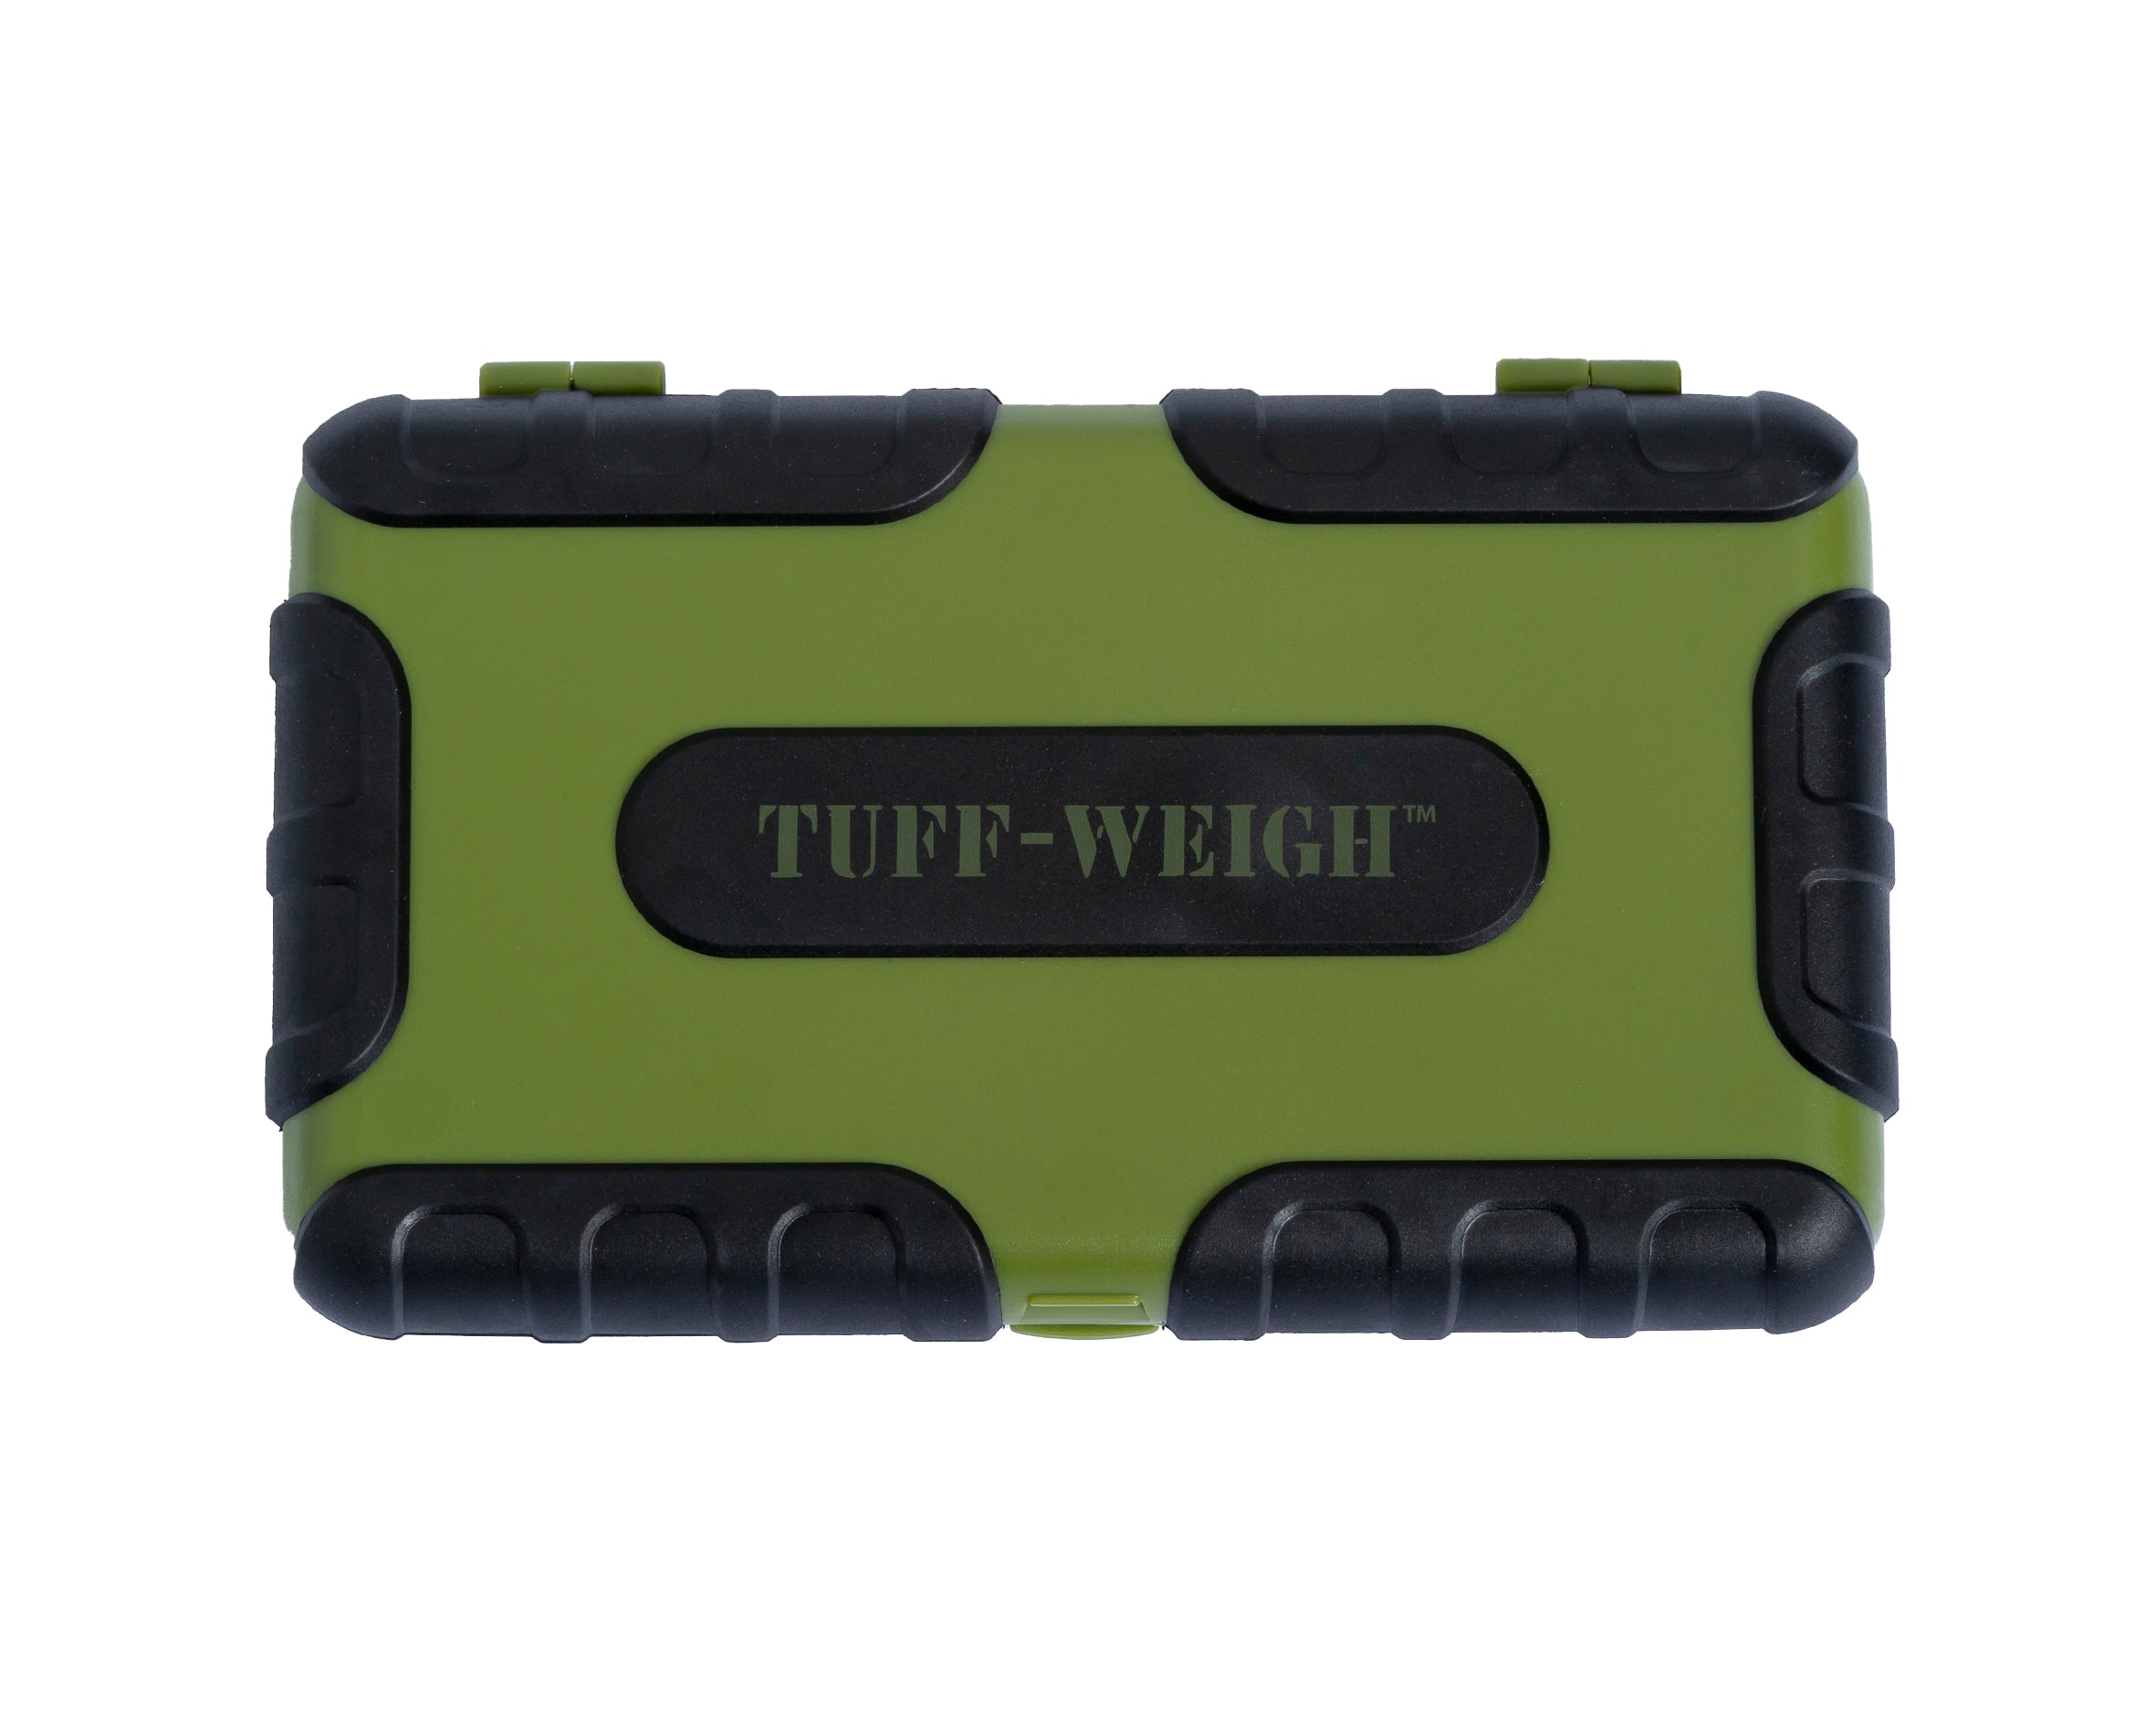 TUF-1000-GN On Balance Tuff-Weigh Pocket Scale - Green 1000g x 0.1g